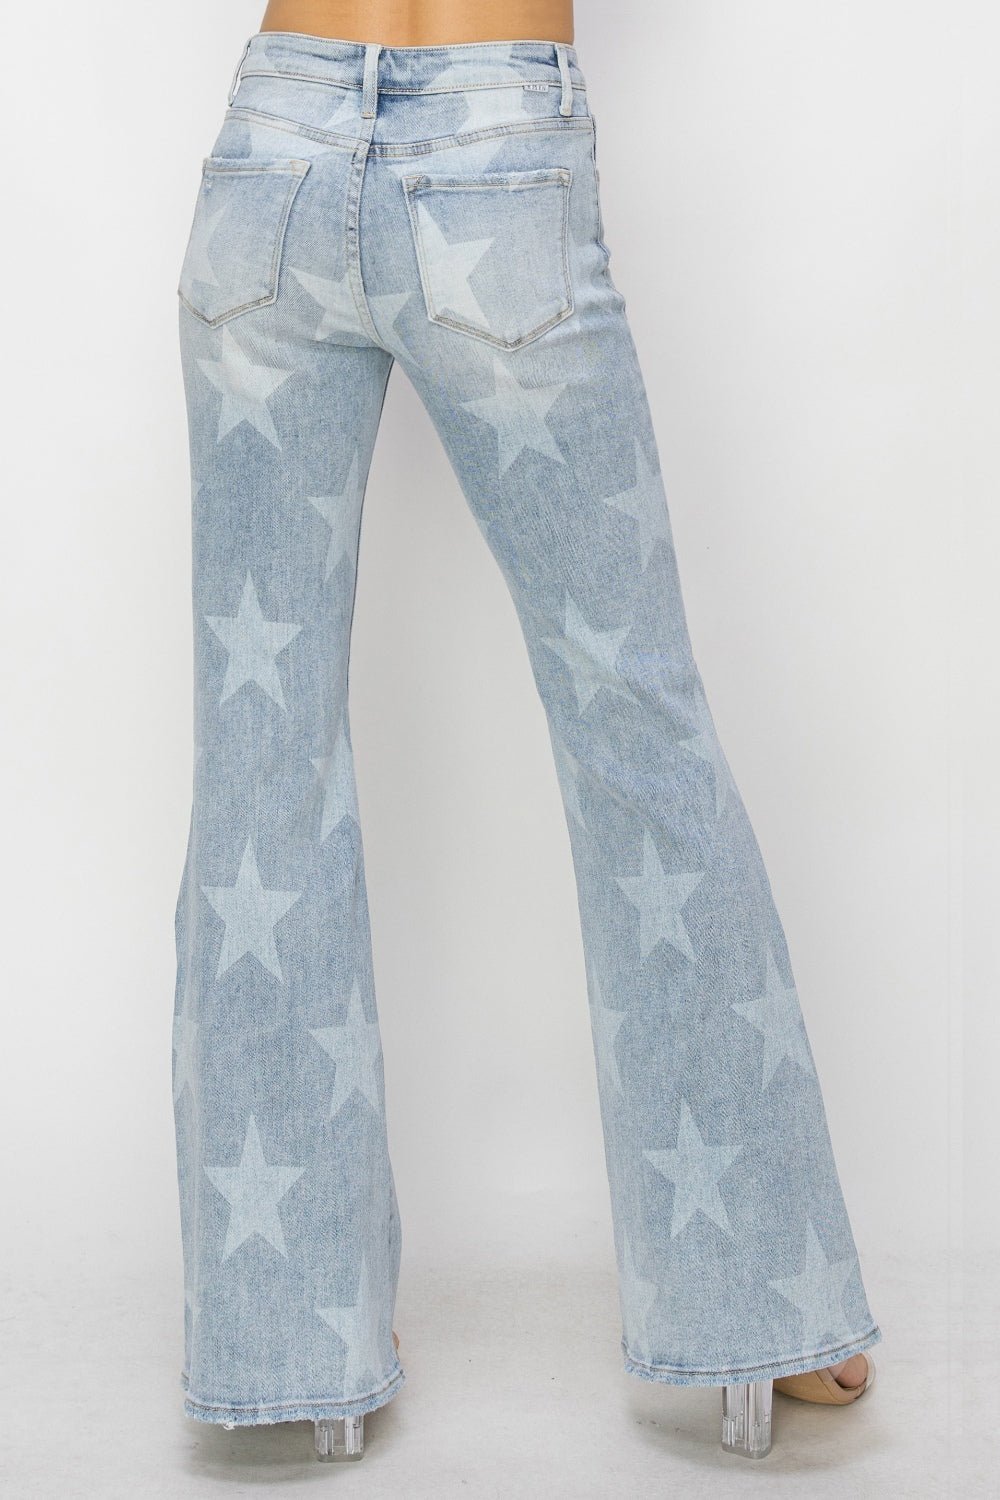 Light Wash Mid Rise Button Fly Star Print Flare JeansJeansRISEN